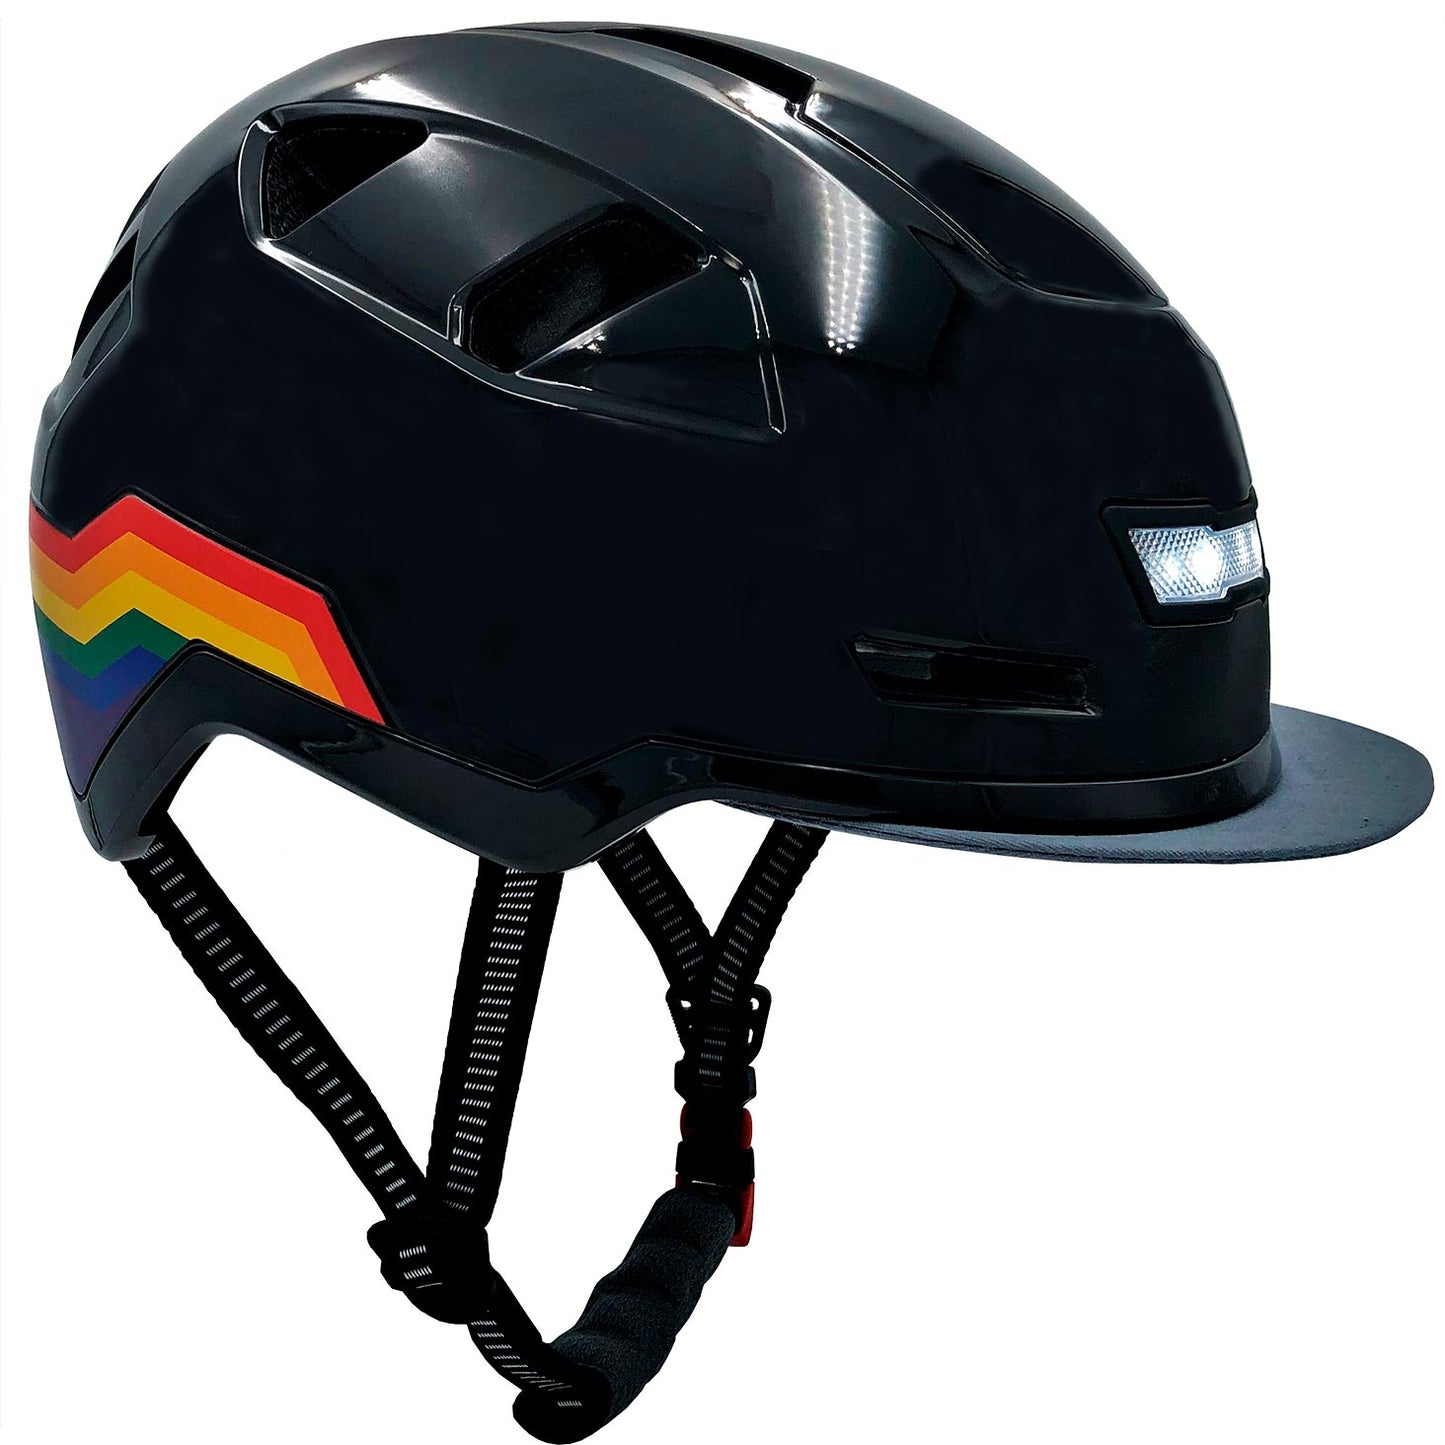 XNITO Helmet | E-Bike Helmet